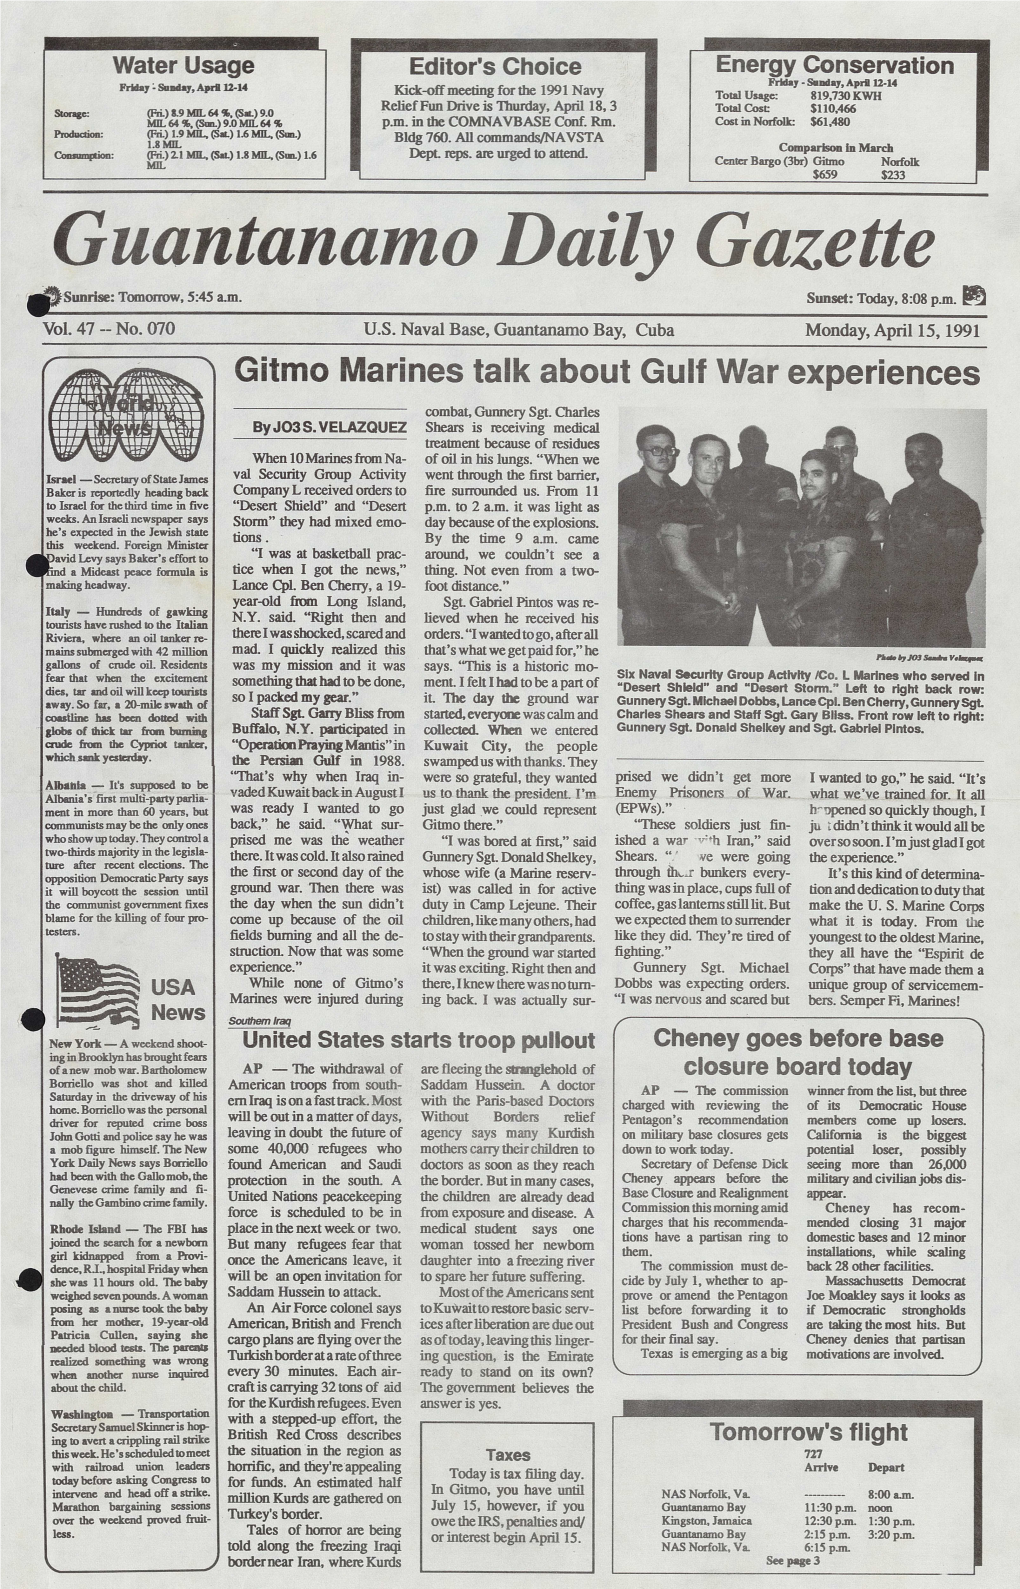 Guantanamo Daily Gazette Sunrise: Tomorrow, 5:45 Am